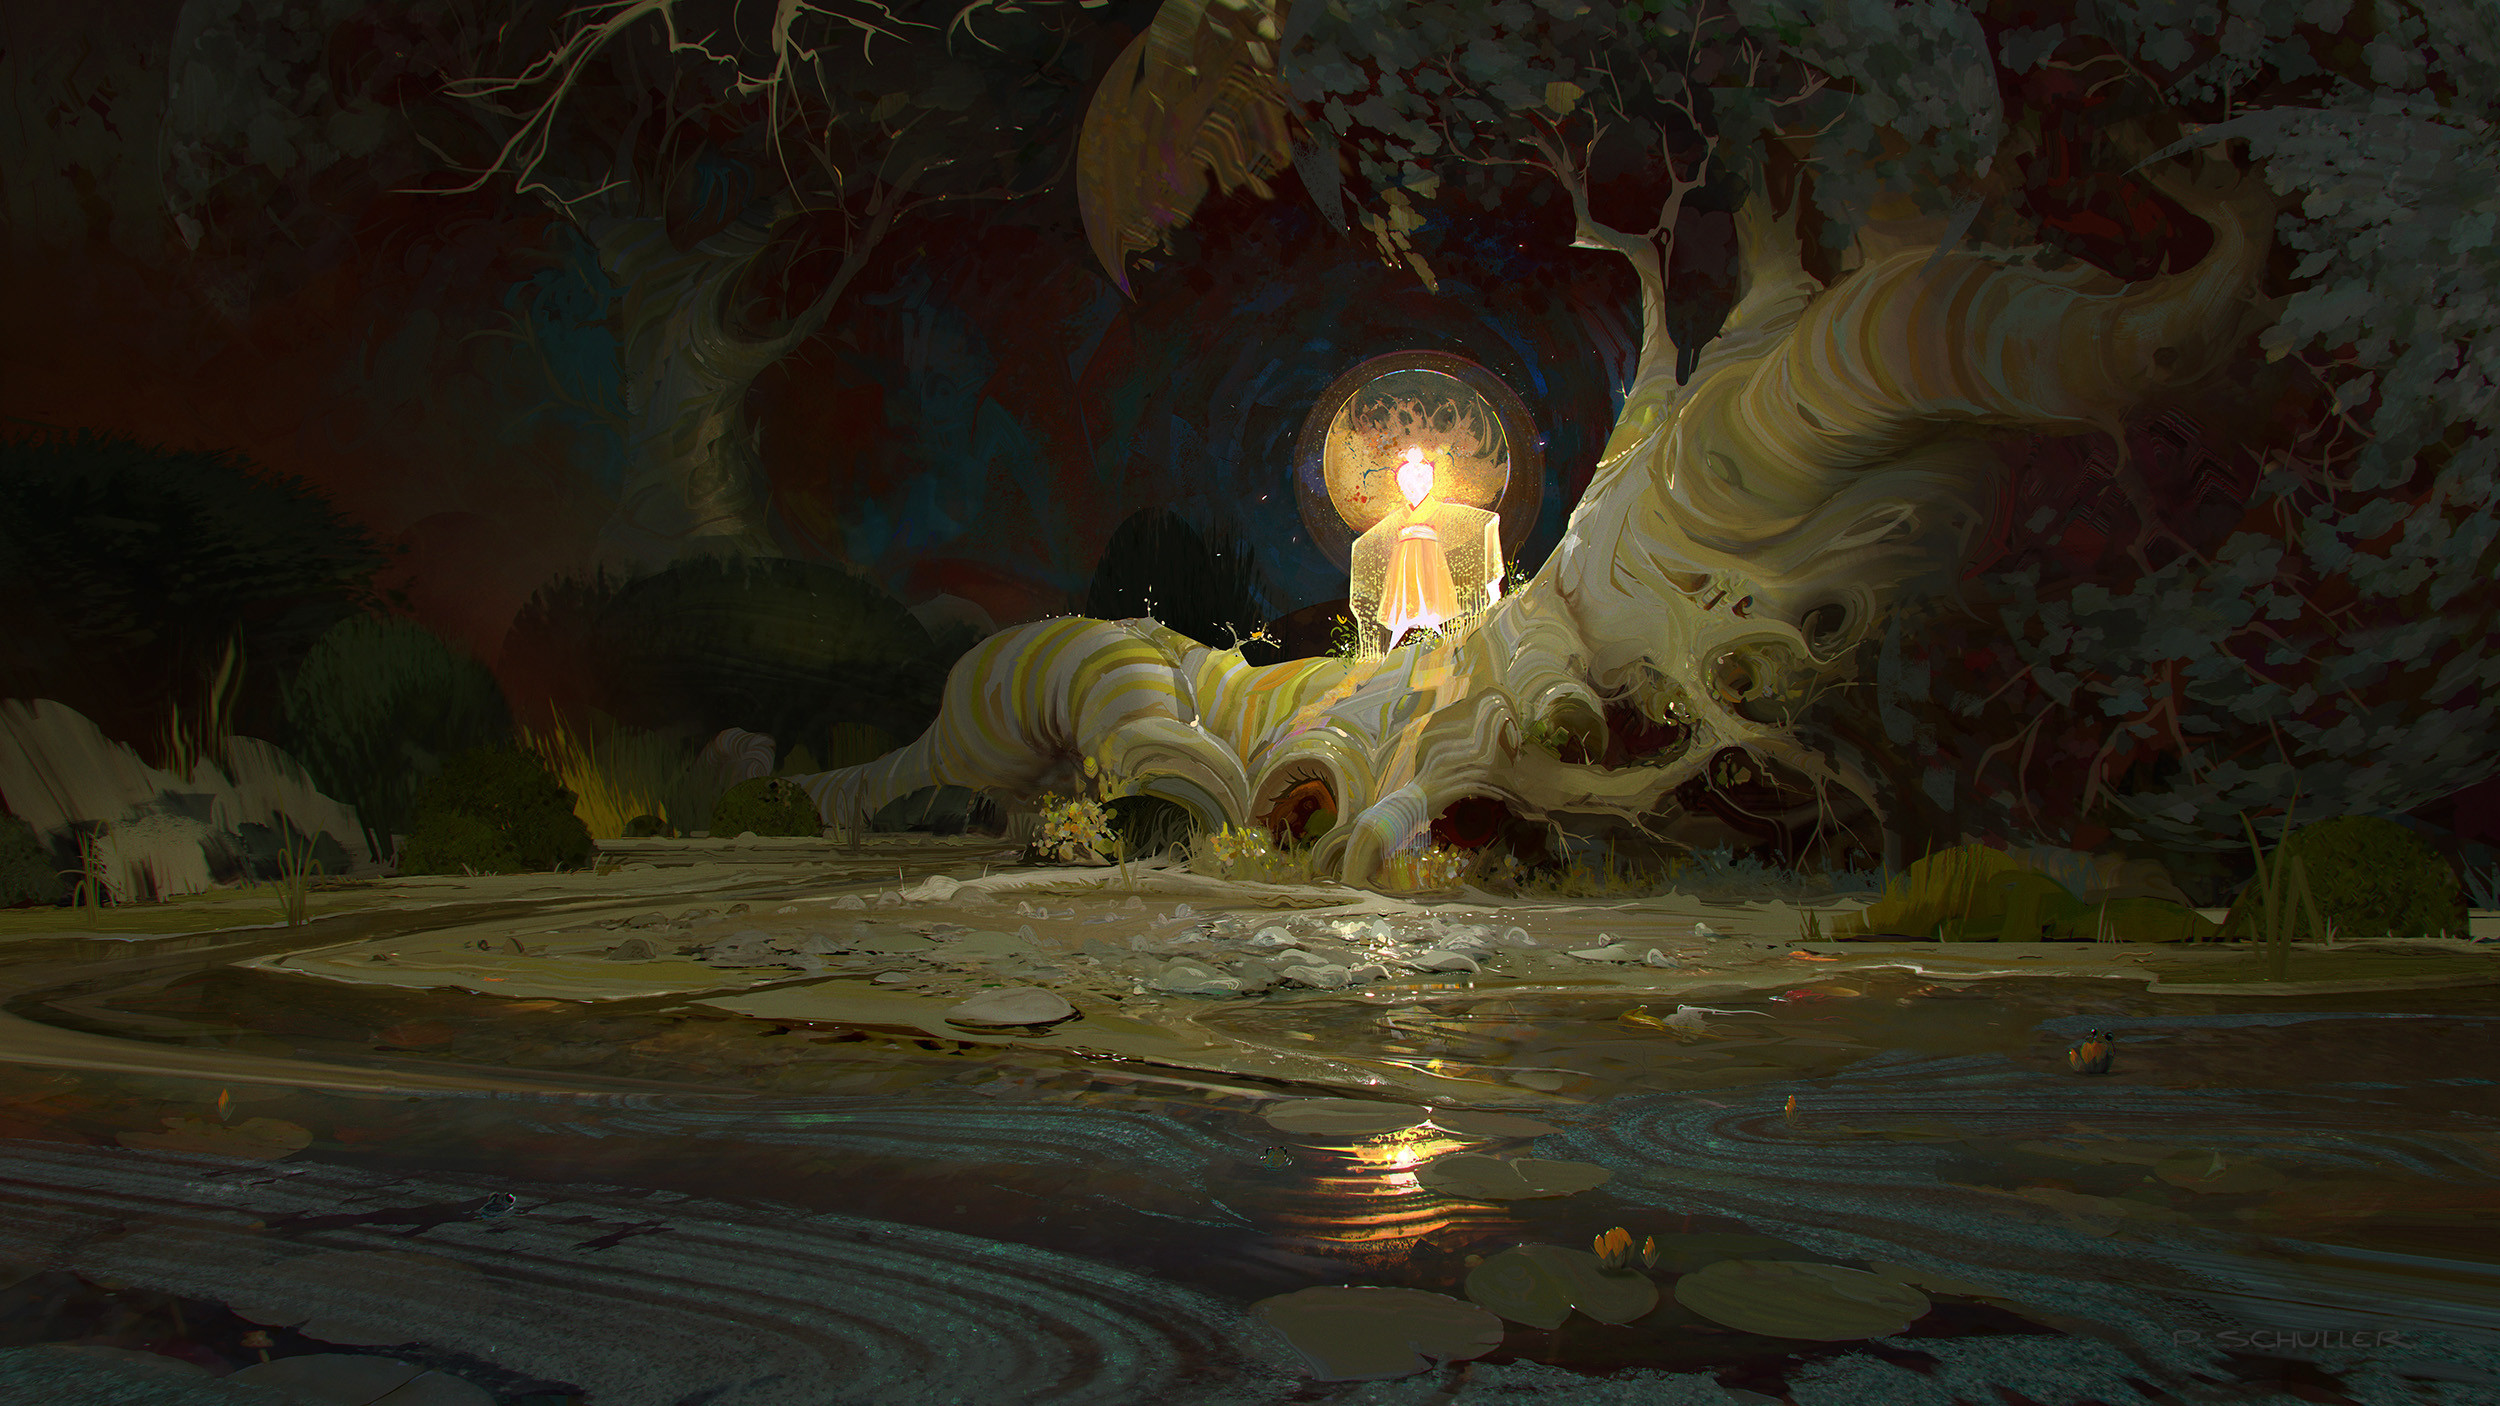 Artwork Digital Art Landscape Pierre Alexandre Schuller Painting Light Effects Halo Tree Stump Refle 2500x1406